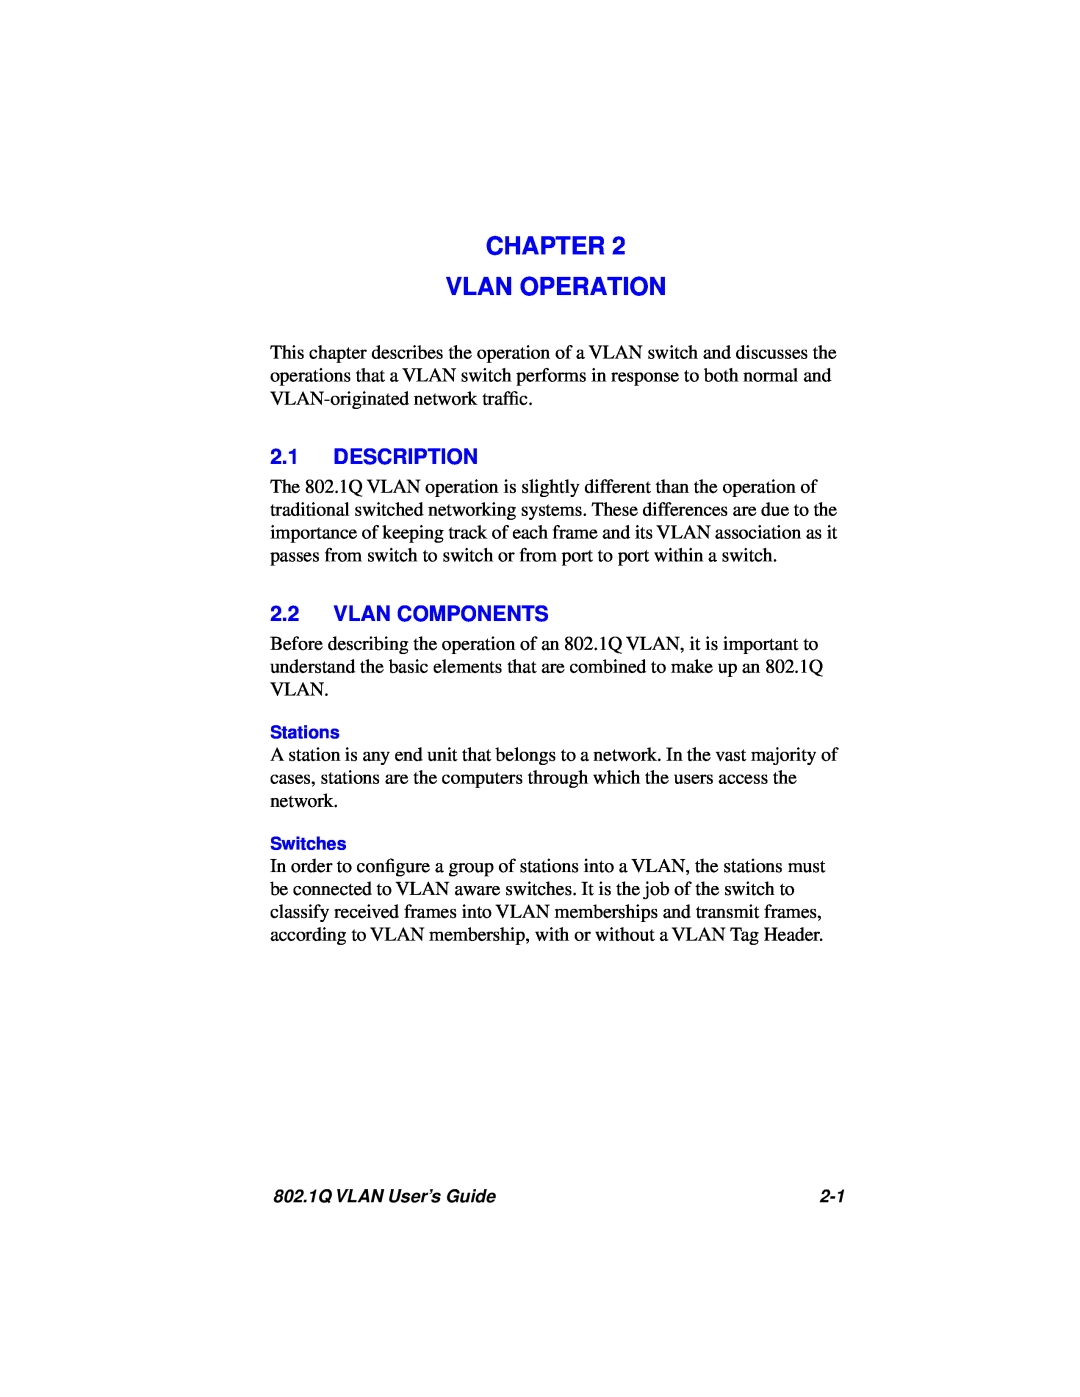 Cabletron Systems 802.1Q manual Chapter Vlan Operation, Description, Vlan Components 